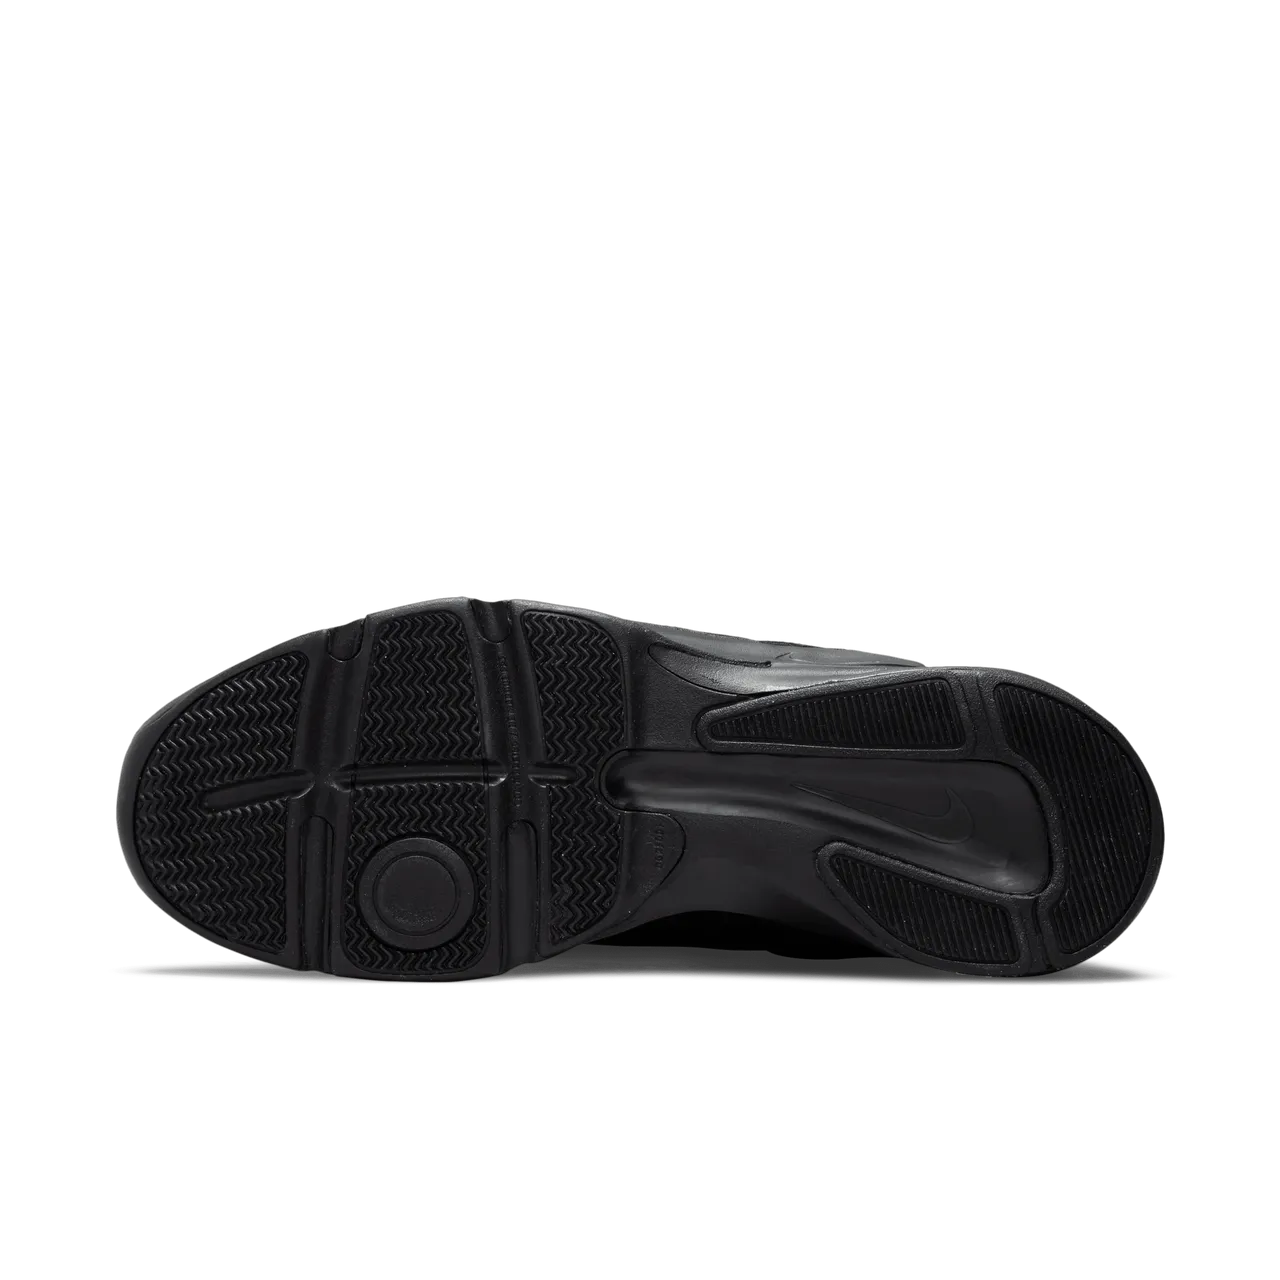 Nike Defy All Day Men's Training Shoe - Black - Leather